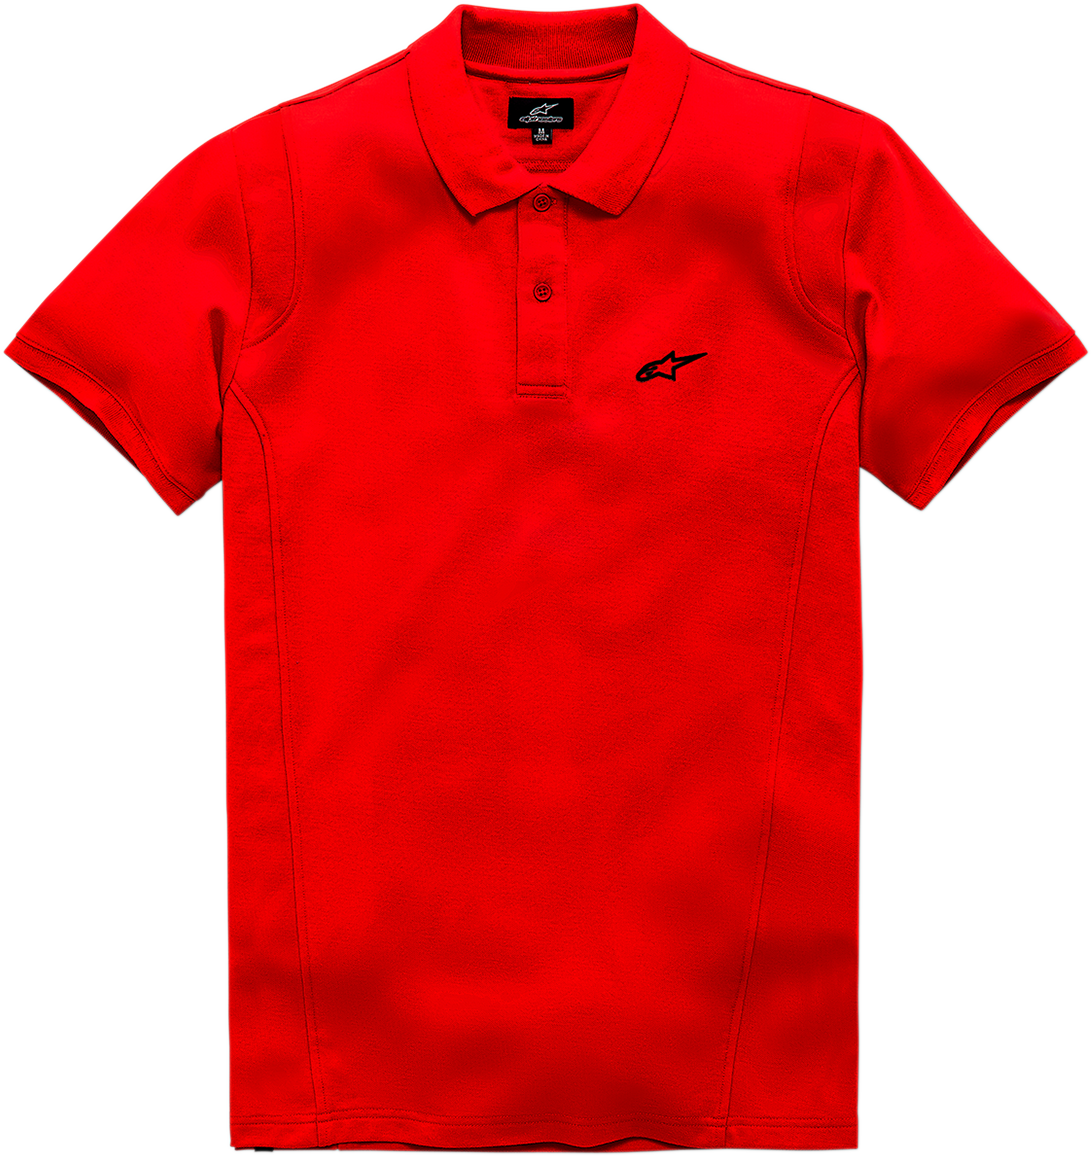 Capital Polo T-Shirt - Red - Medium